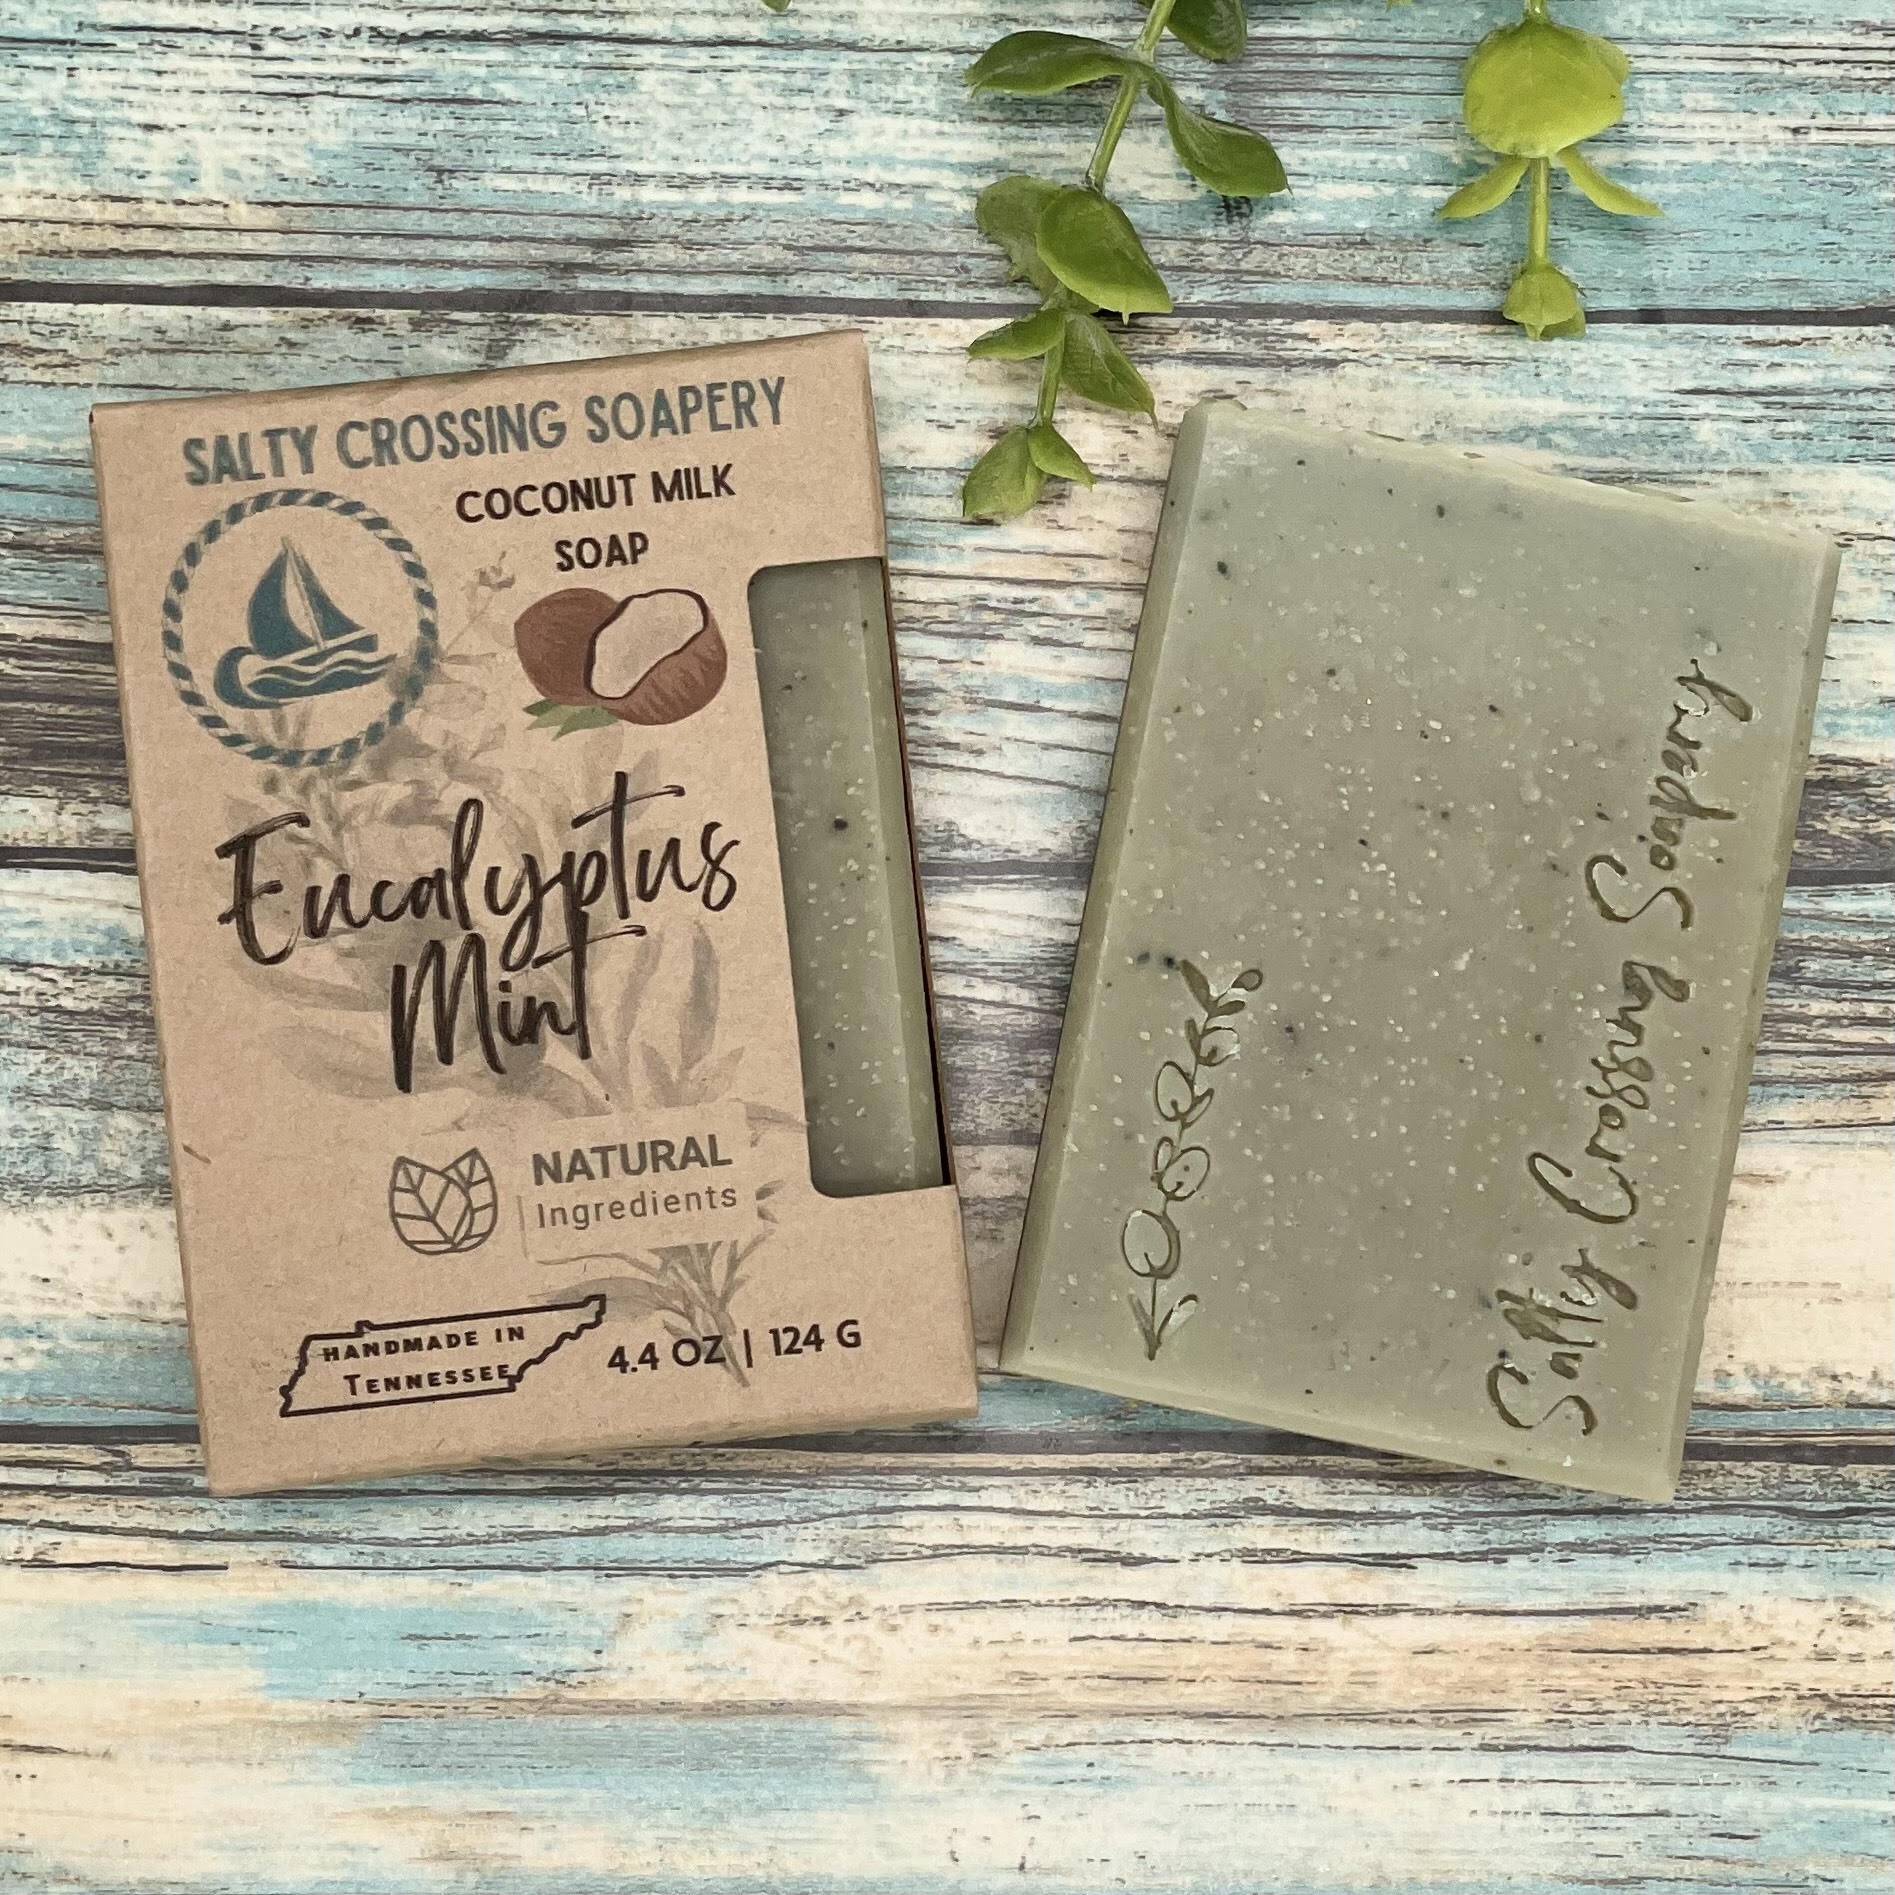 Eucalyptus mint soap bar with box